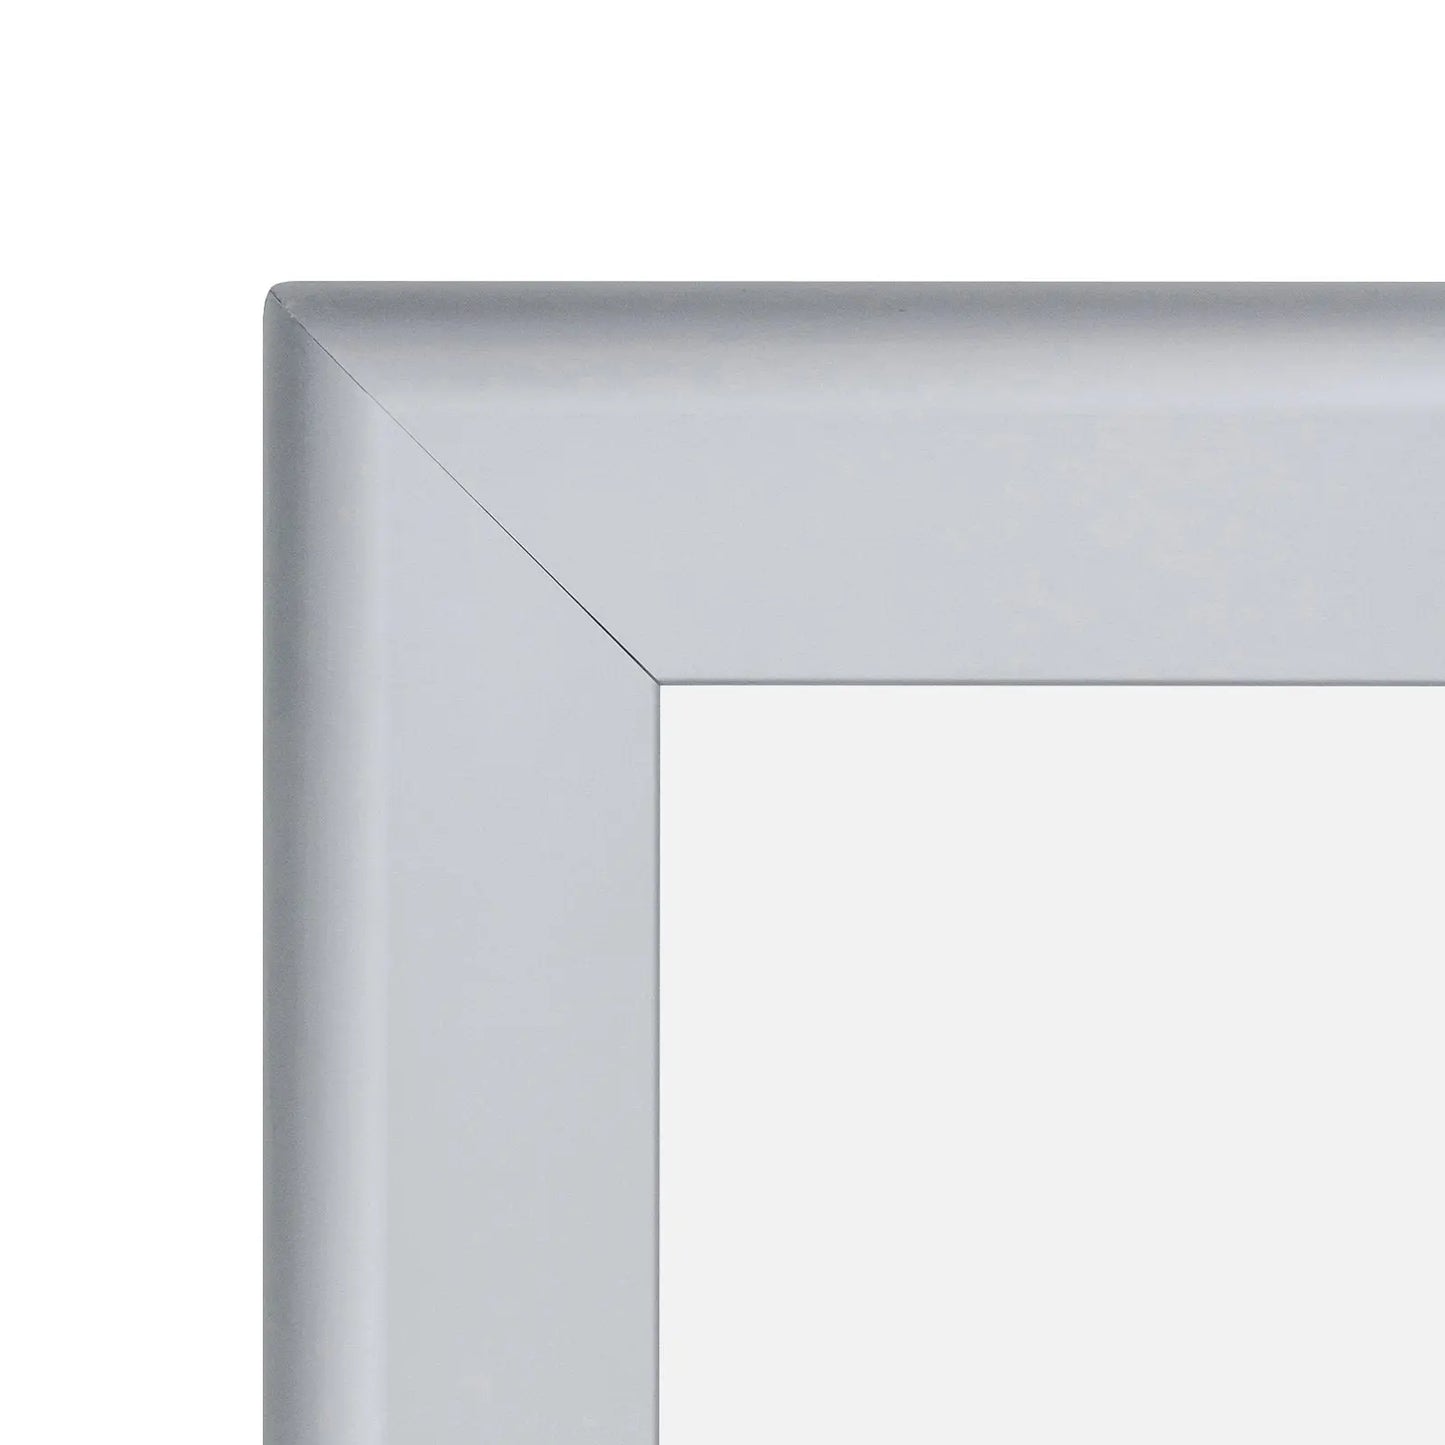 24x36 Silver SnapeZo® Snap Frame - 1.7" Profile - Snap Frames Direct